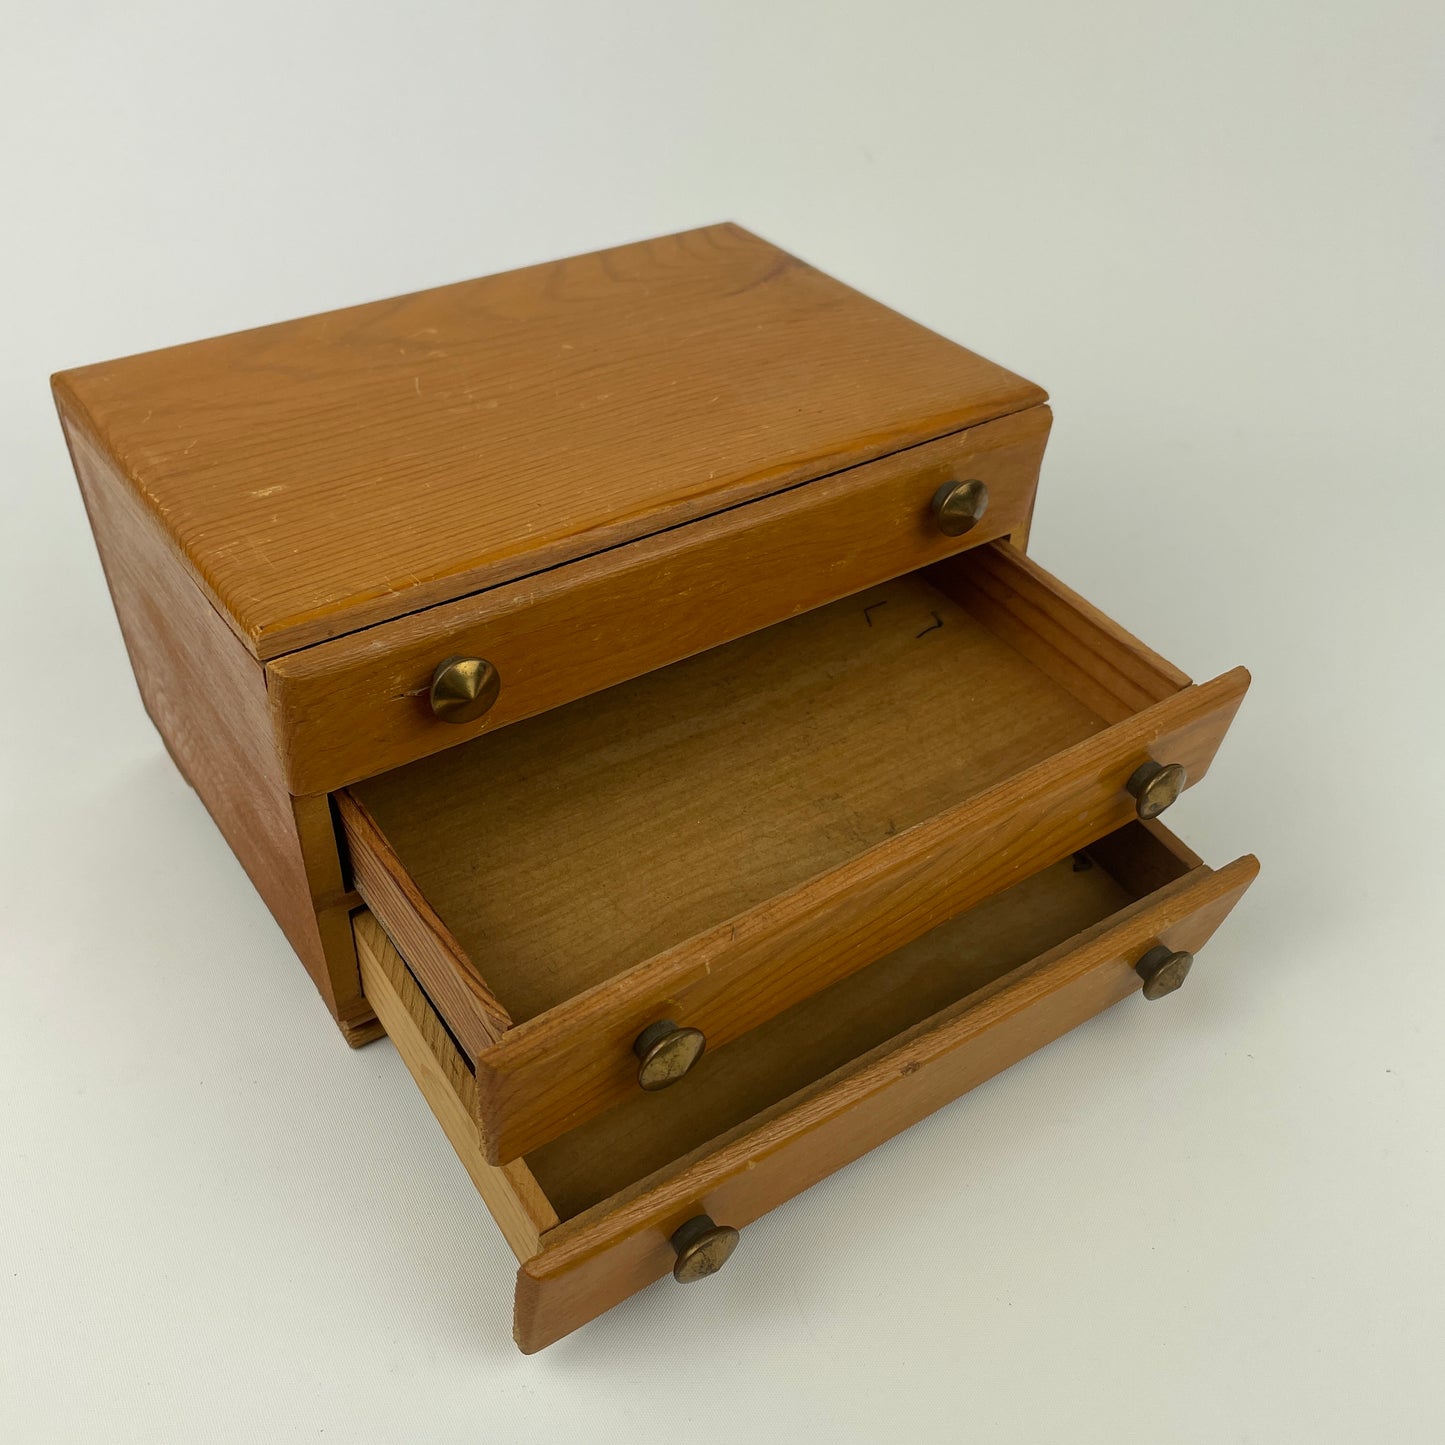 Lot 110- Wooden Storage Cabinet set of (2)